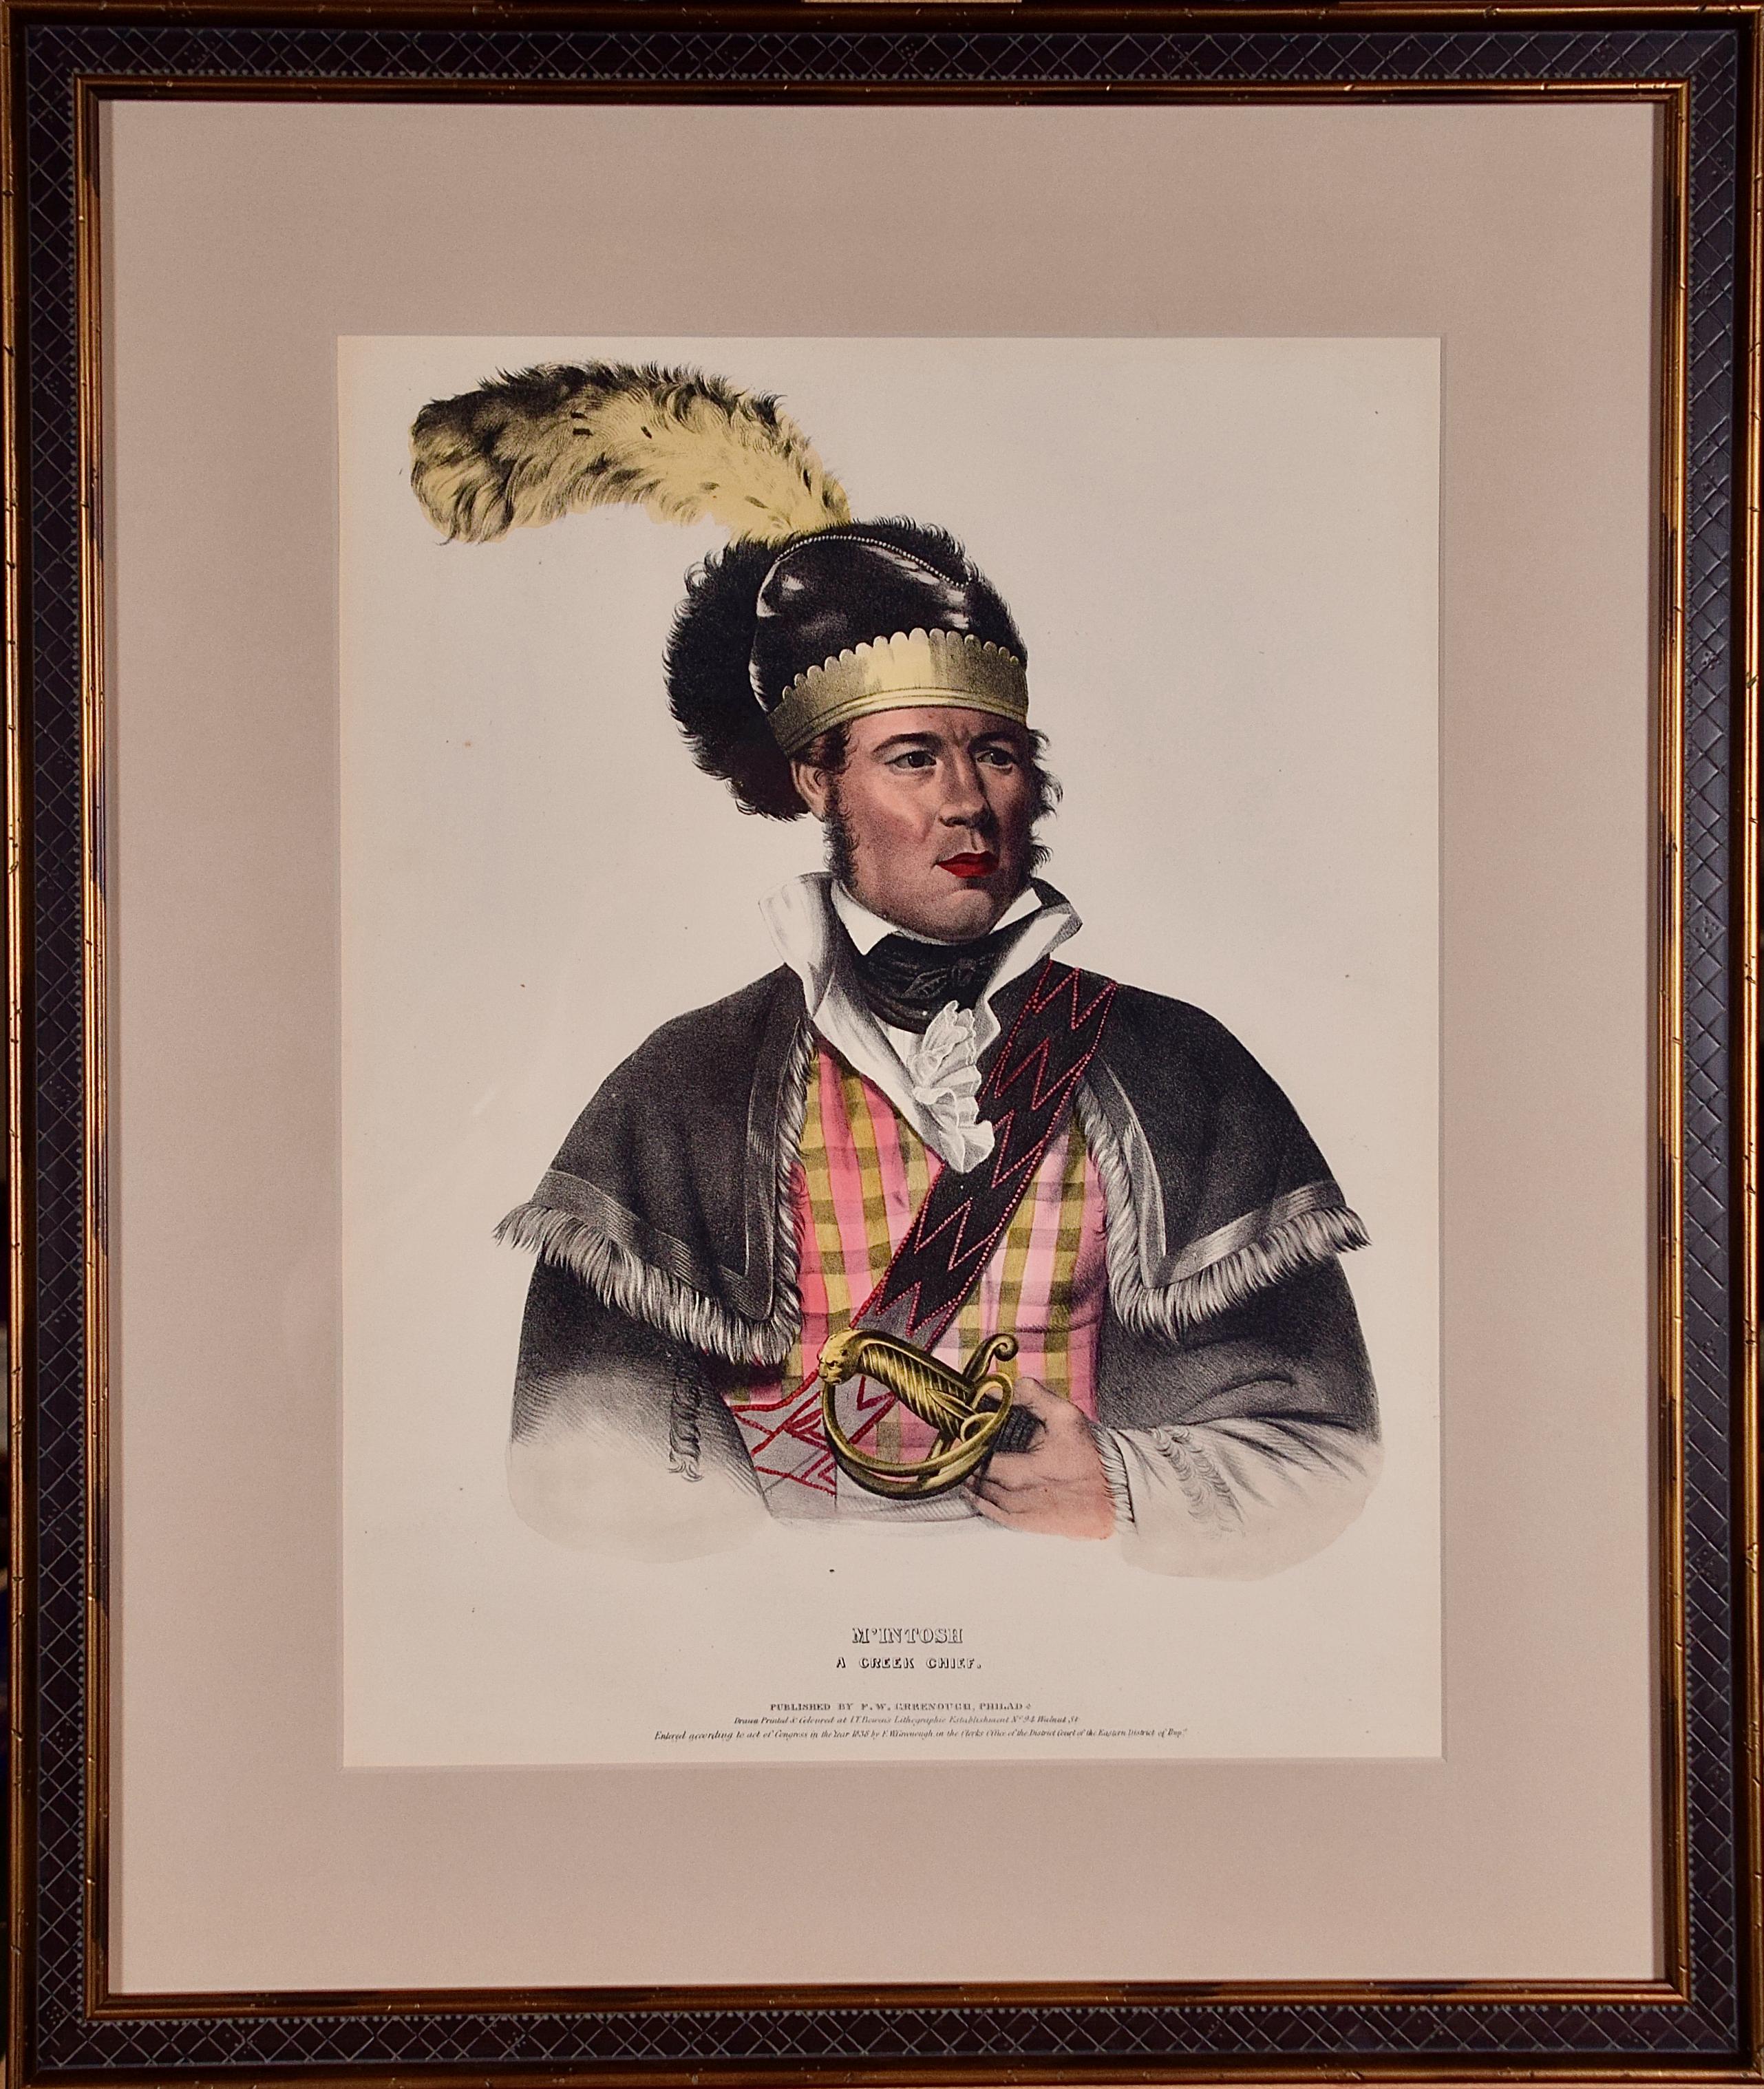 McKenney & Hall Portrait Print - McIntosh, A Creek Chief: Framed Hand-colored McKenney Folio-sized Lithograph